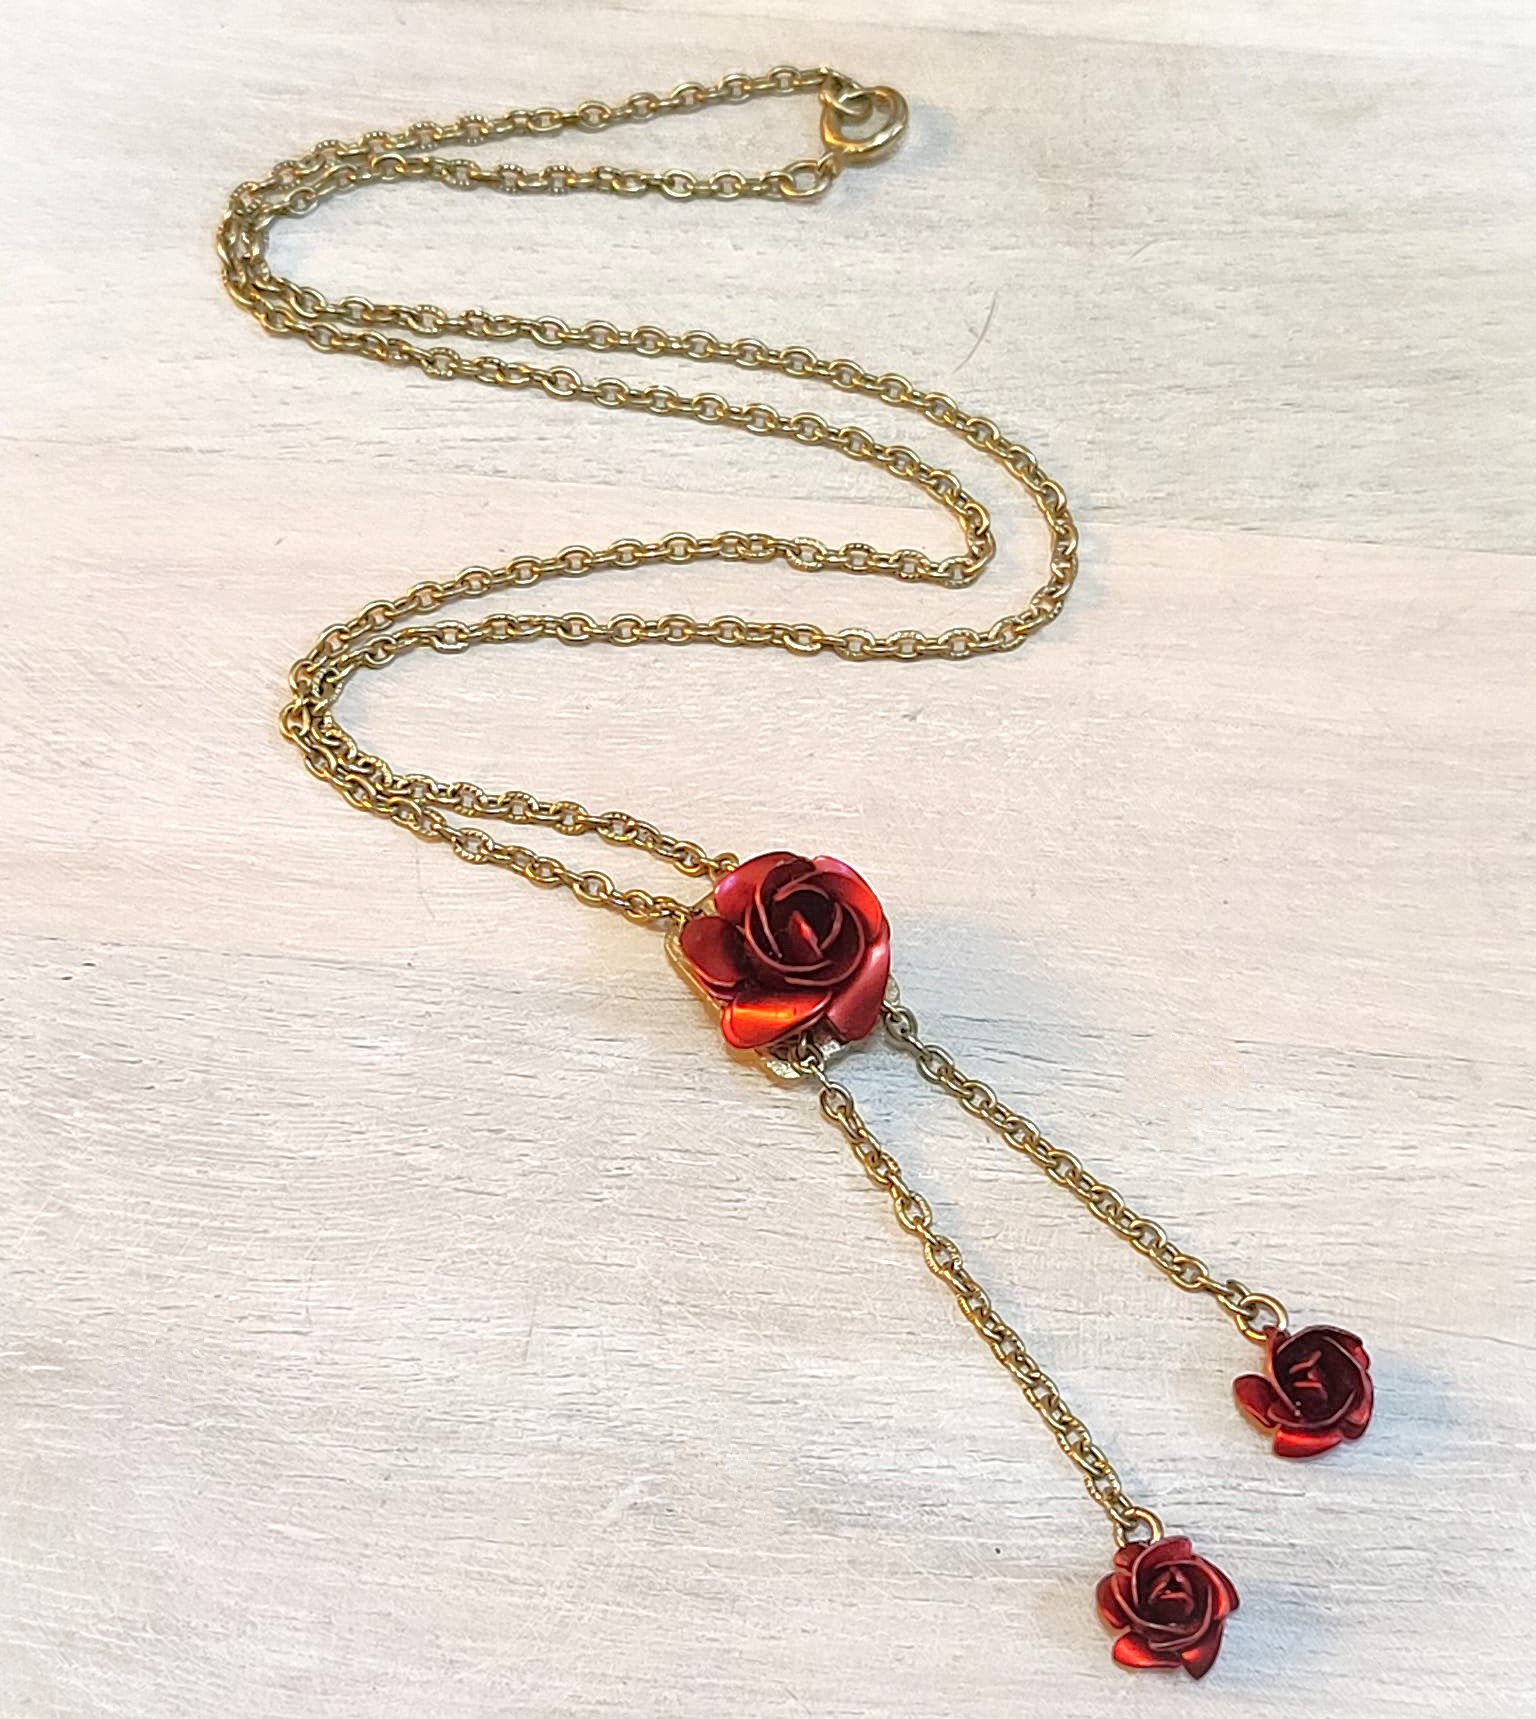 Rose lariat necklace, vintage necklace, adjustable lariate,